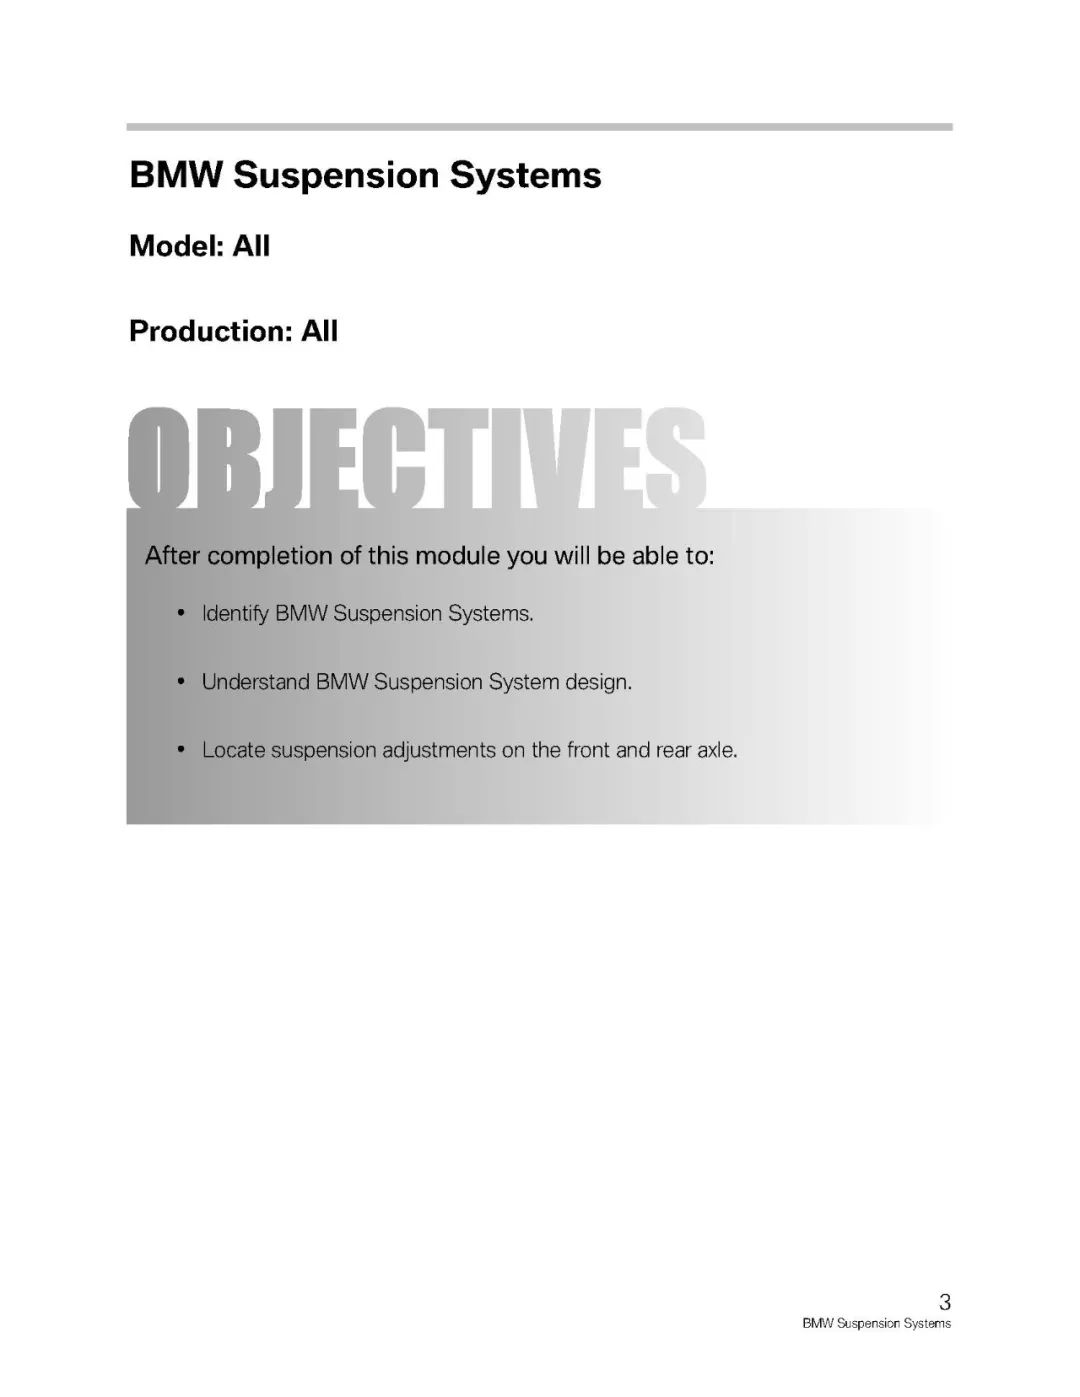 BMW汽车各车型悬架系统介绍w5.jpg